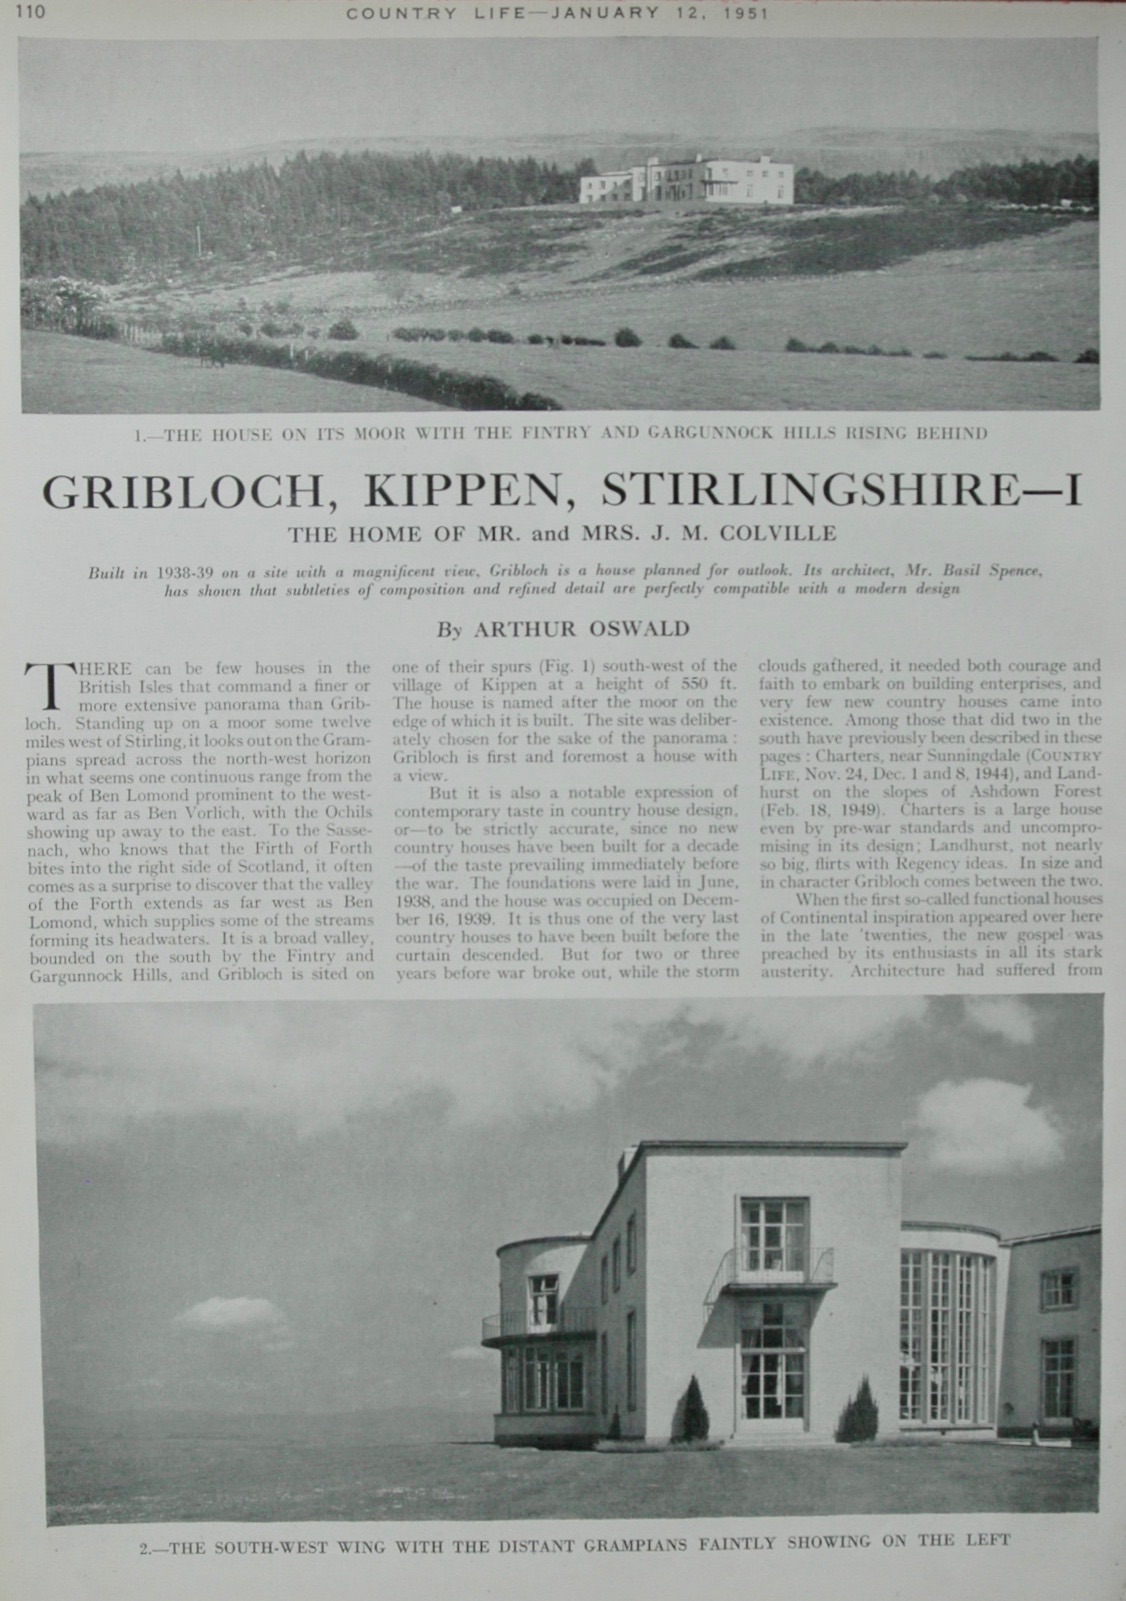 Griblock, Kippen, Stirlingshire - Part I